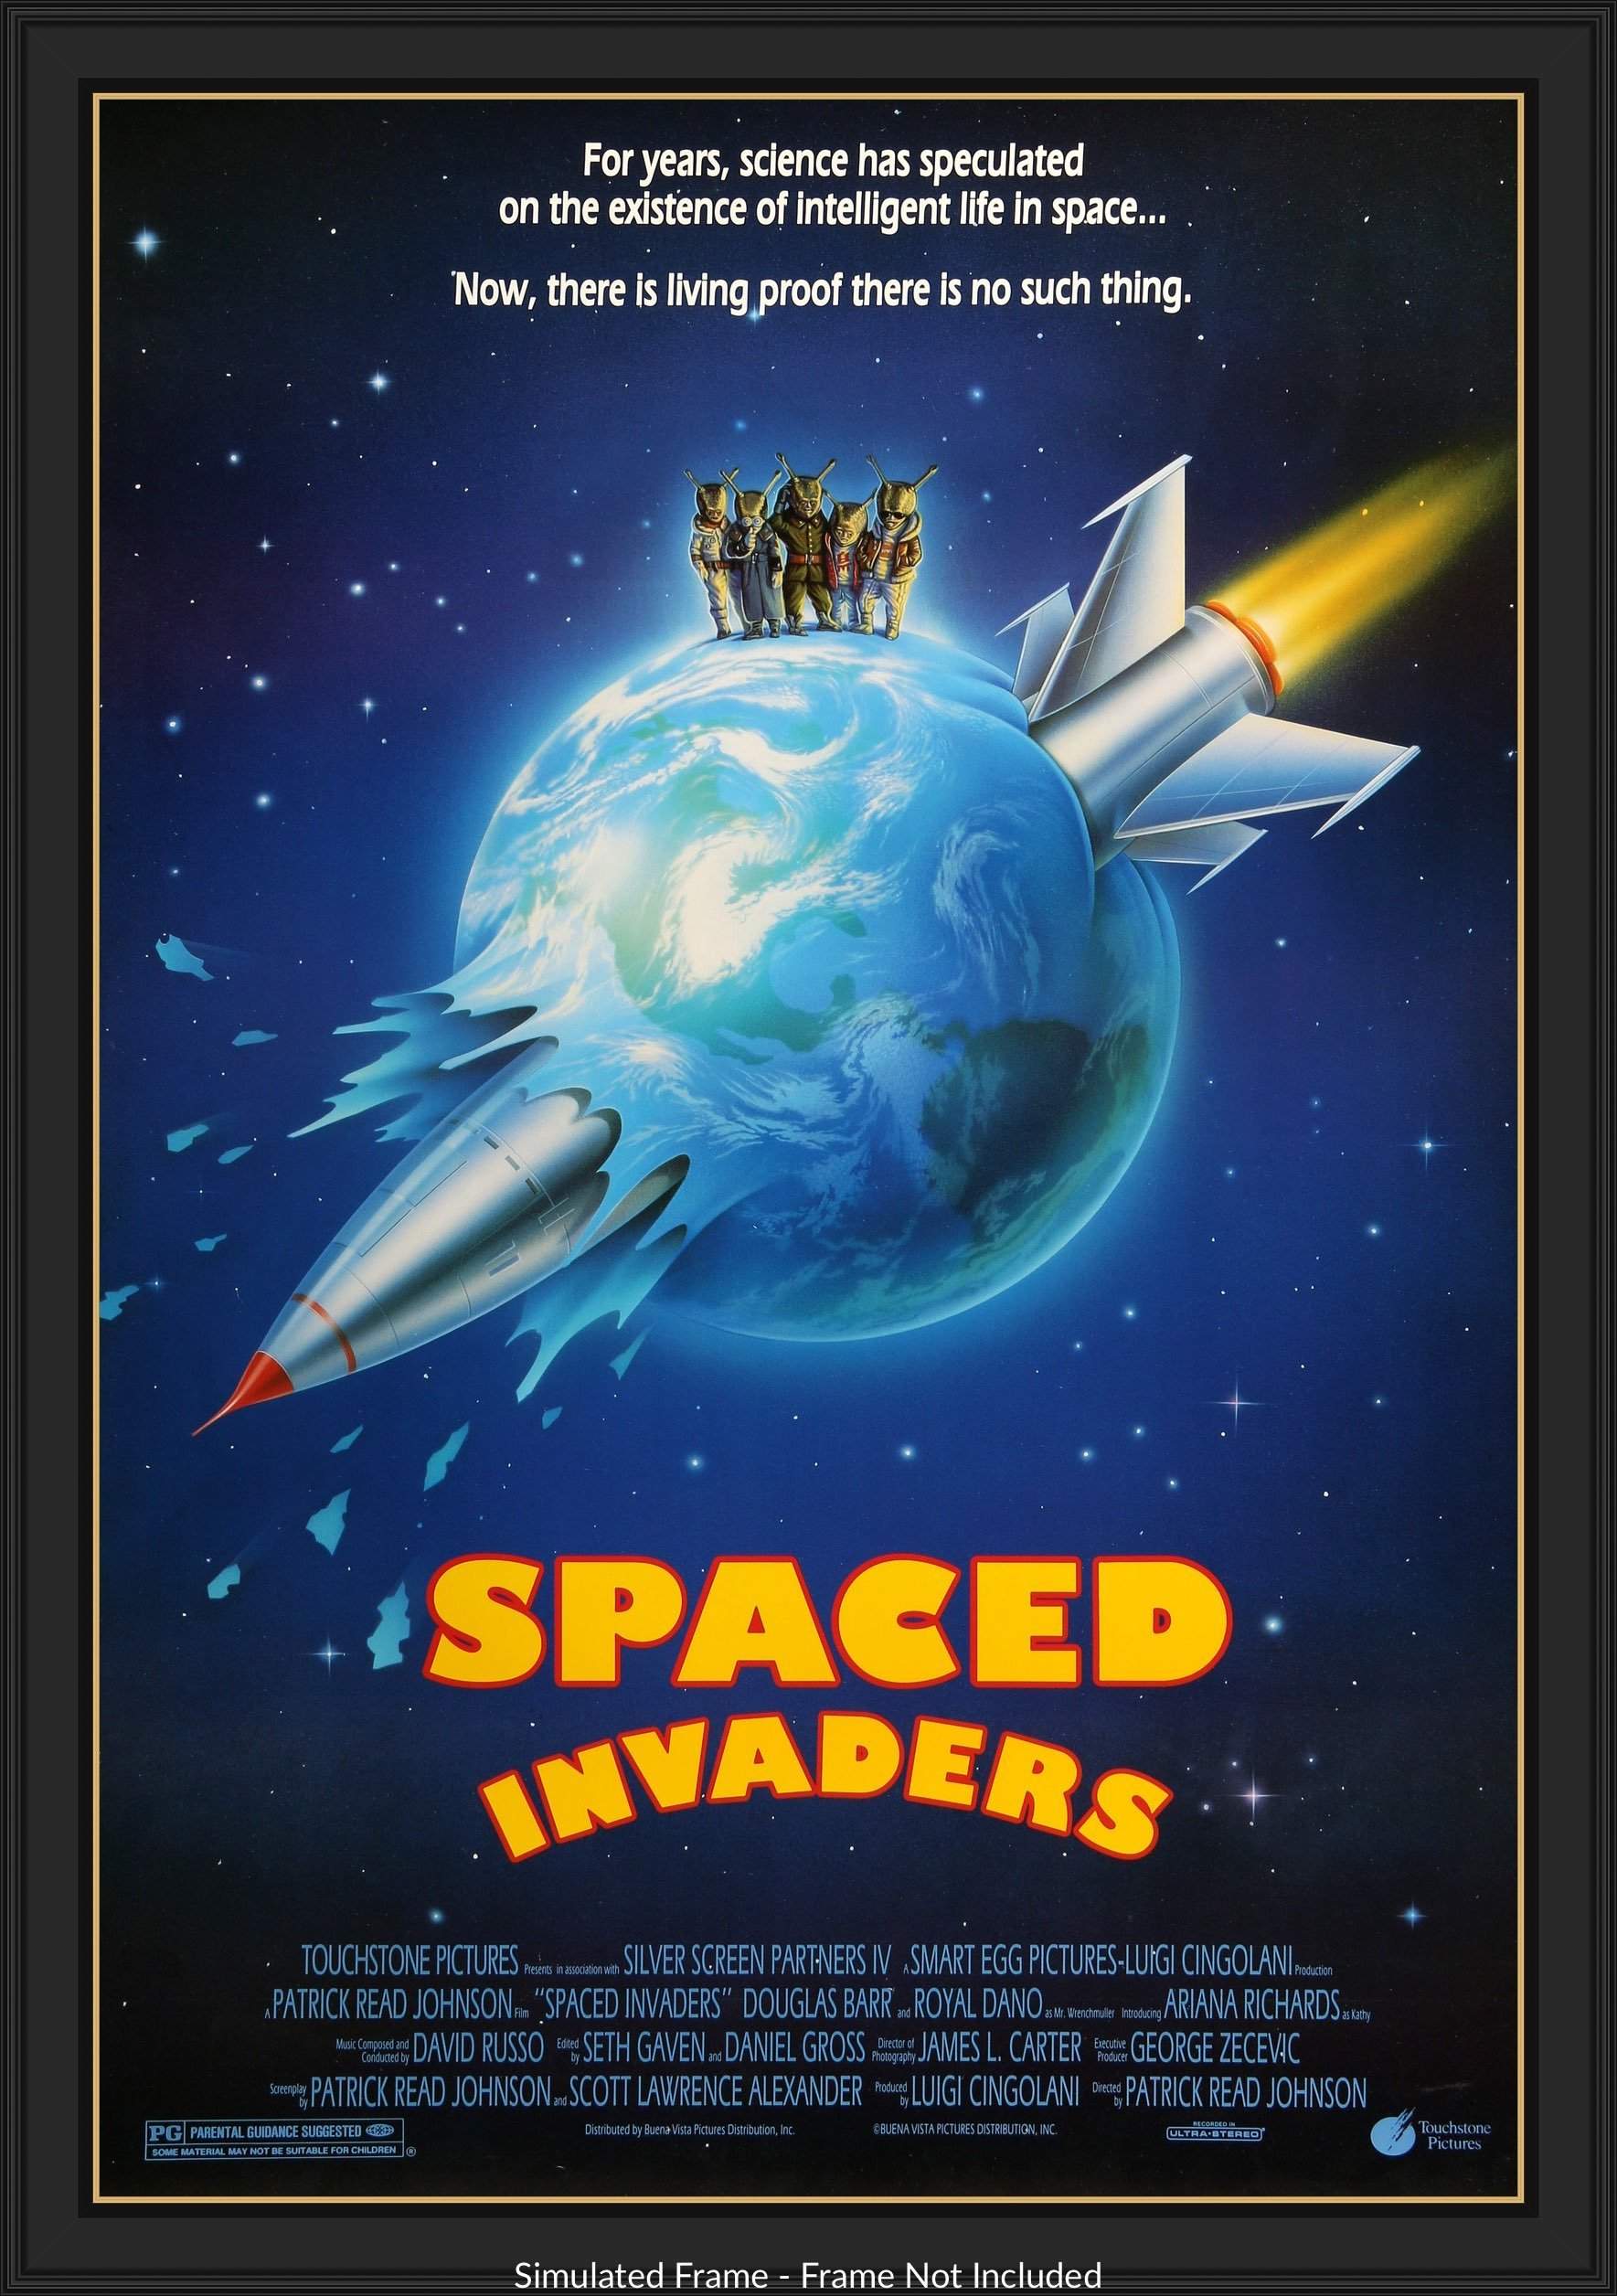 Spaced Invaders (1990) original movie poster for sale at Original Film Art